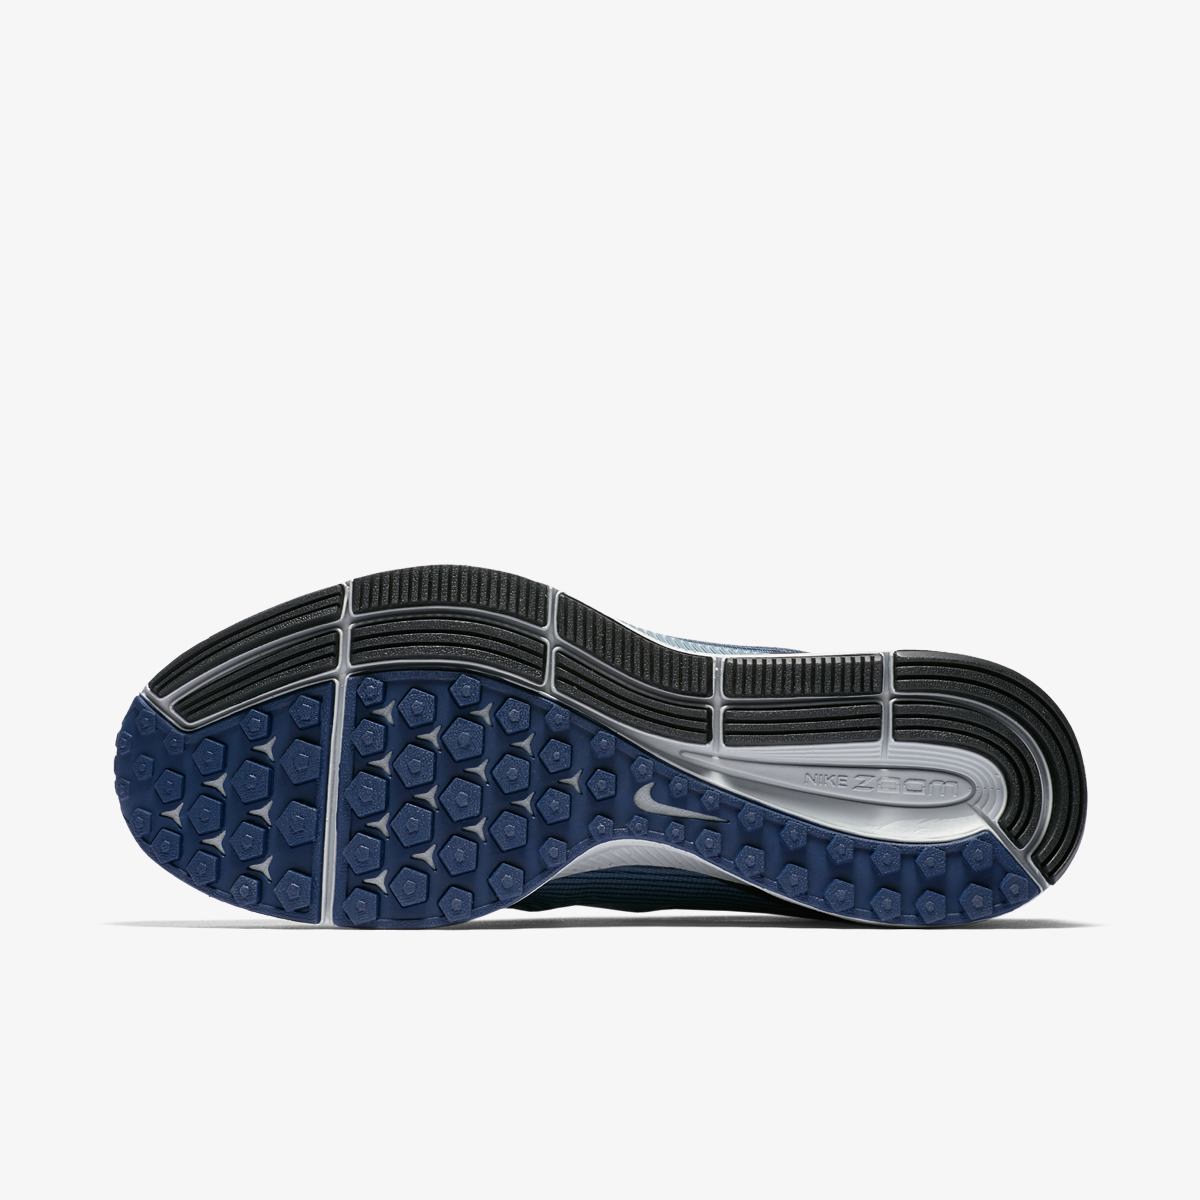 Кроссовки для бега Nike AIR ZOOM PEGASUS 34 SHIELD